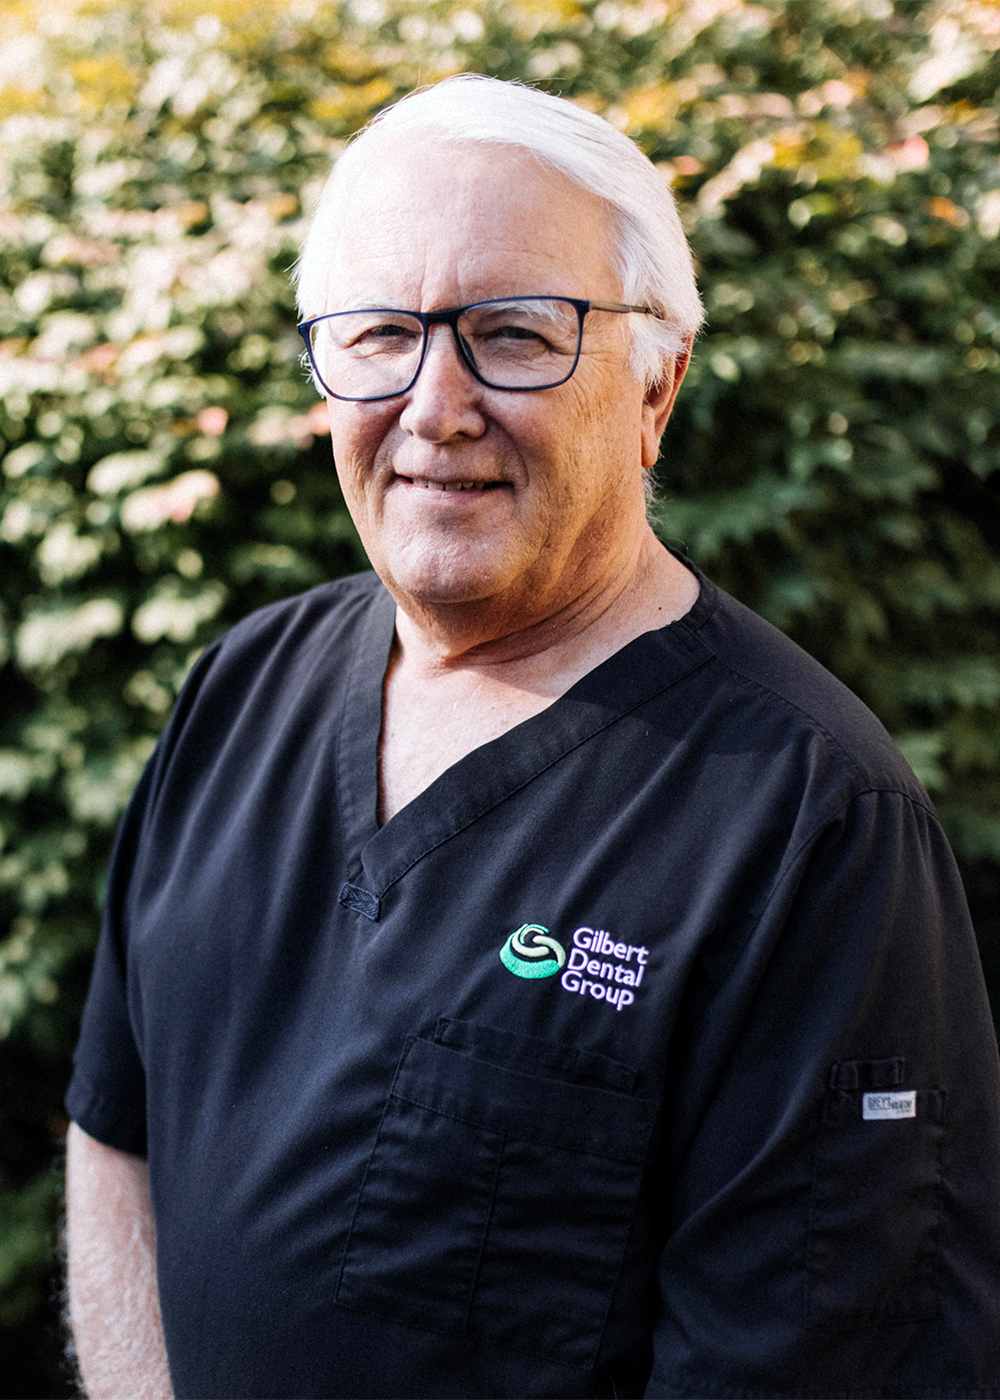 Dr. Paul Gilbert from Gilbert Dental Group